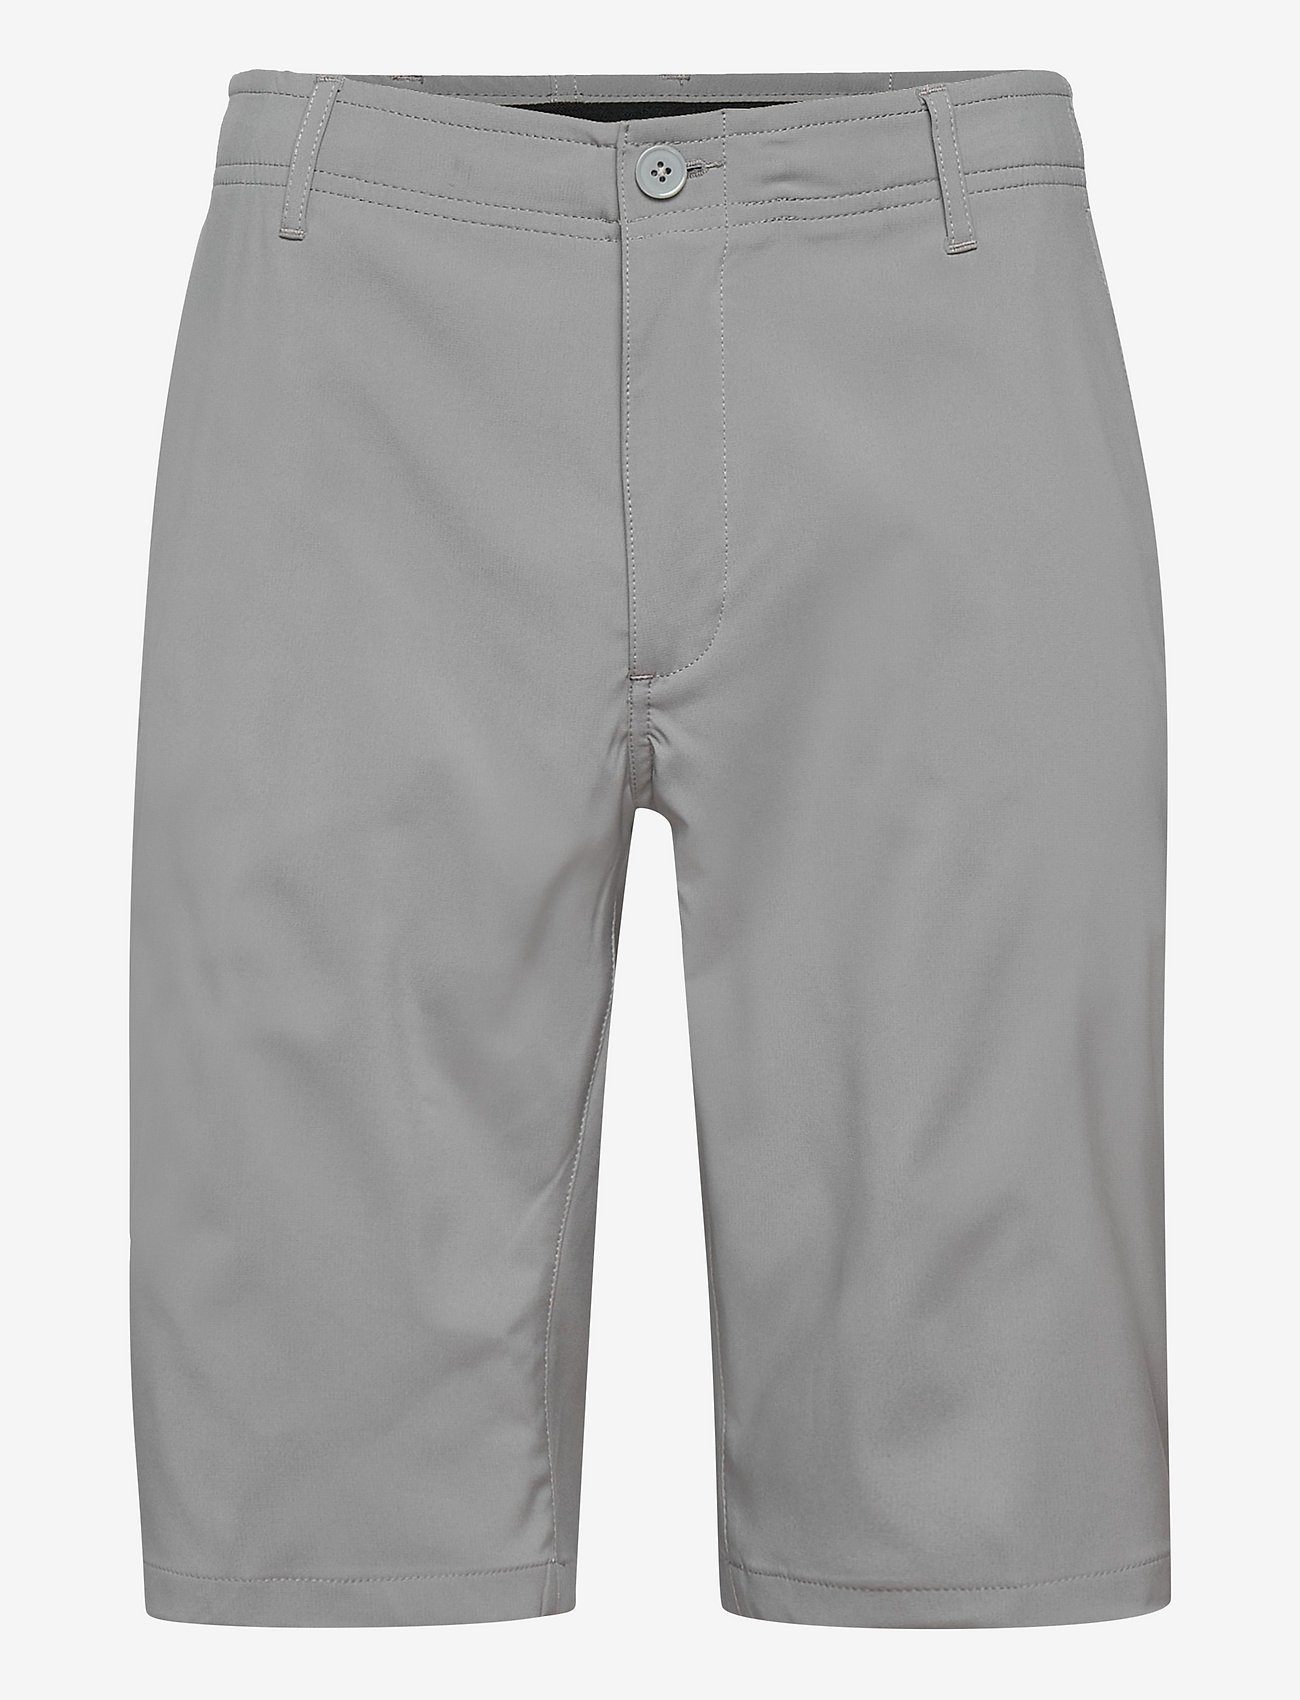 Abacus - Men Cleek flex shorts - golfa šorti - grey - 0